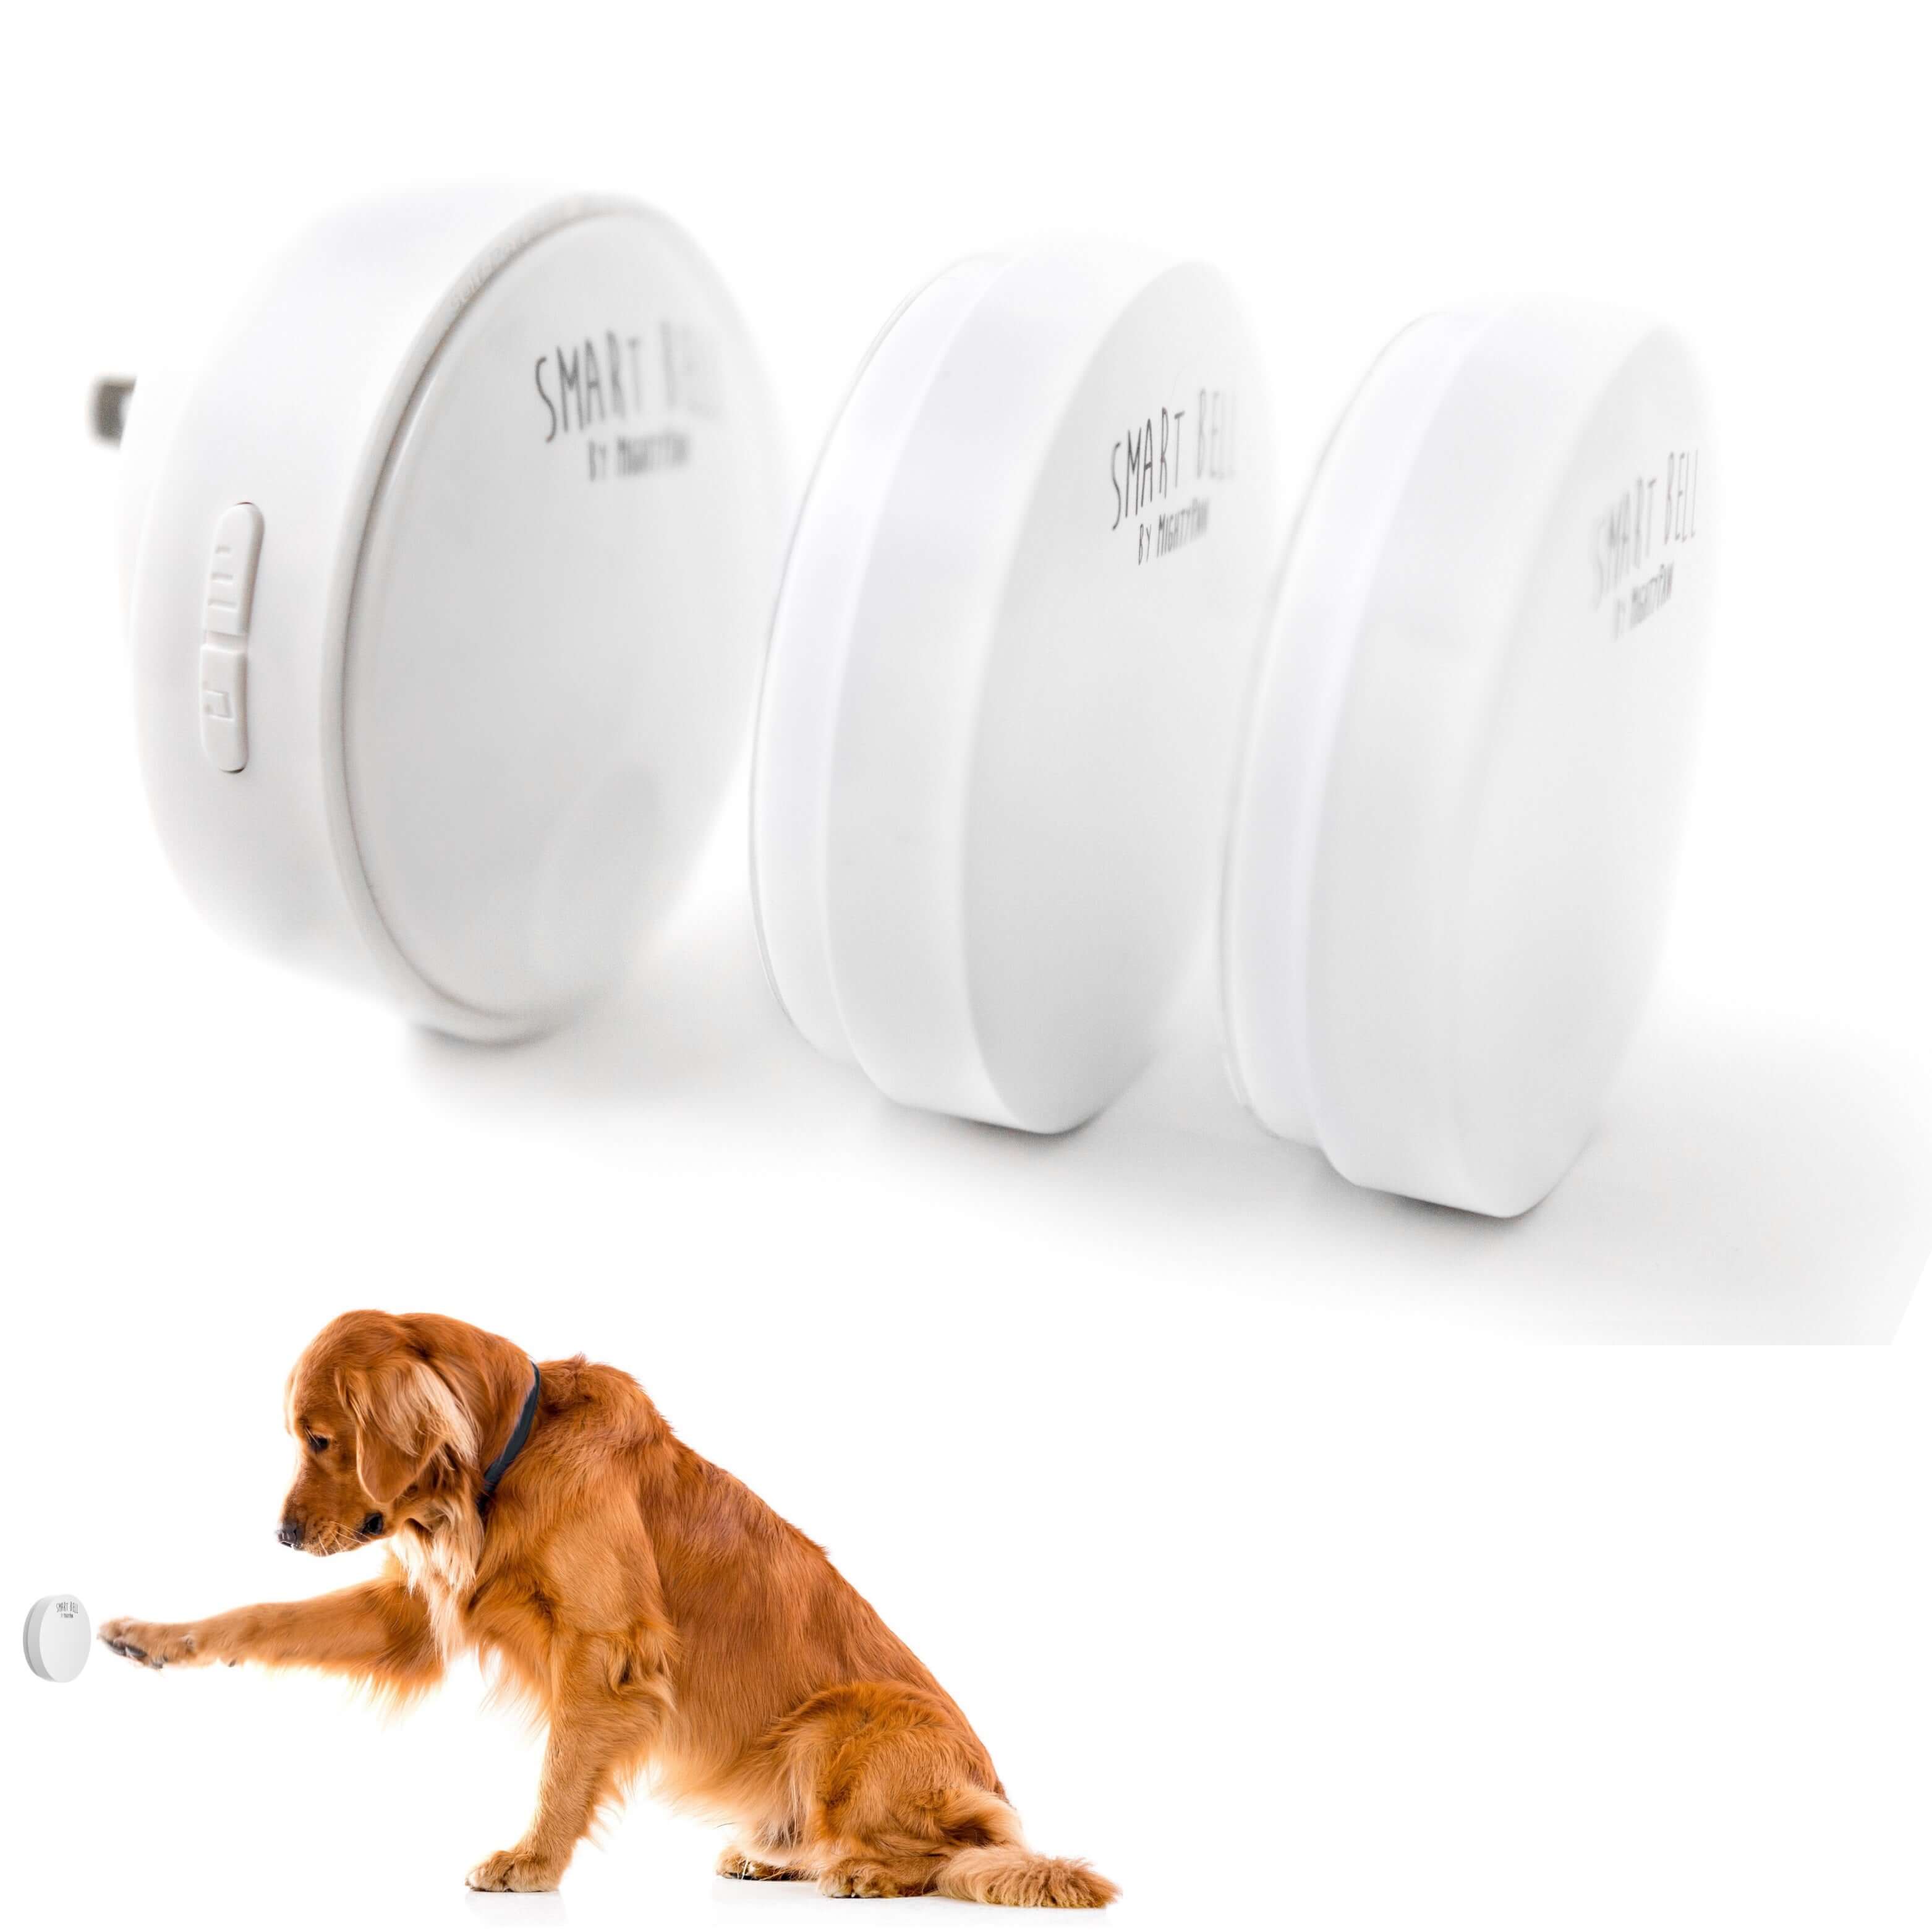 Mighty Paw Smart Bell 2.0 (Wireless Dog Doorbell)